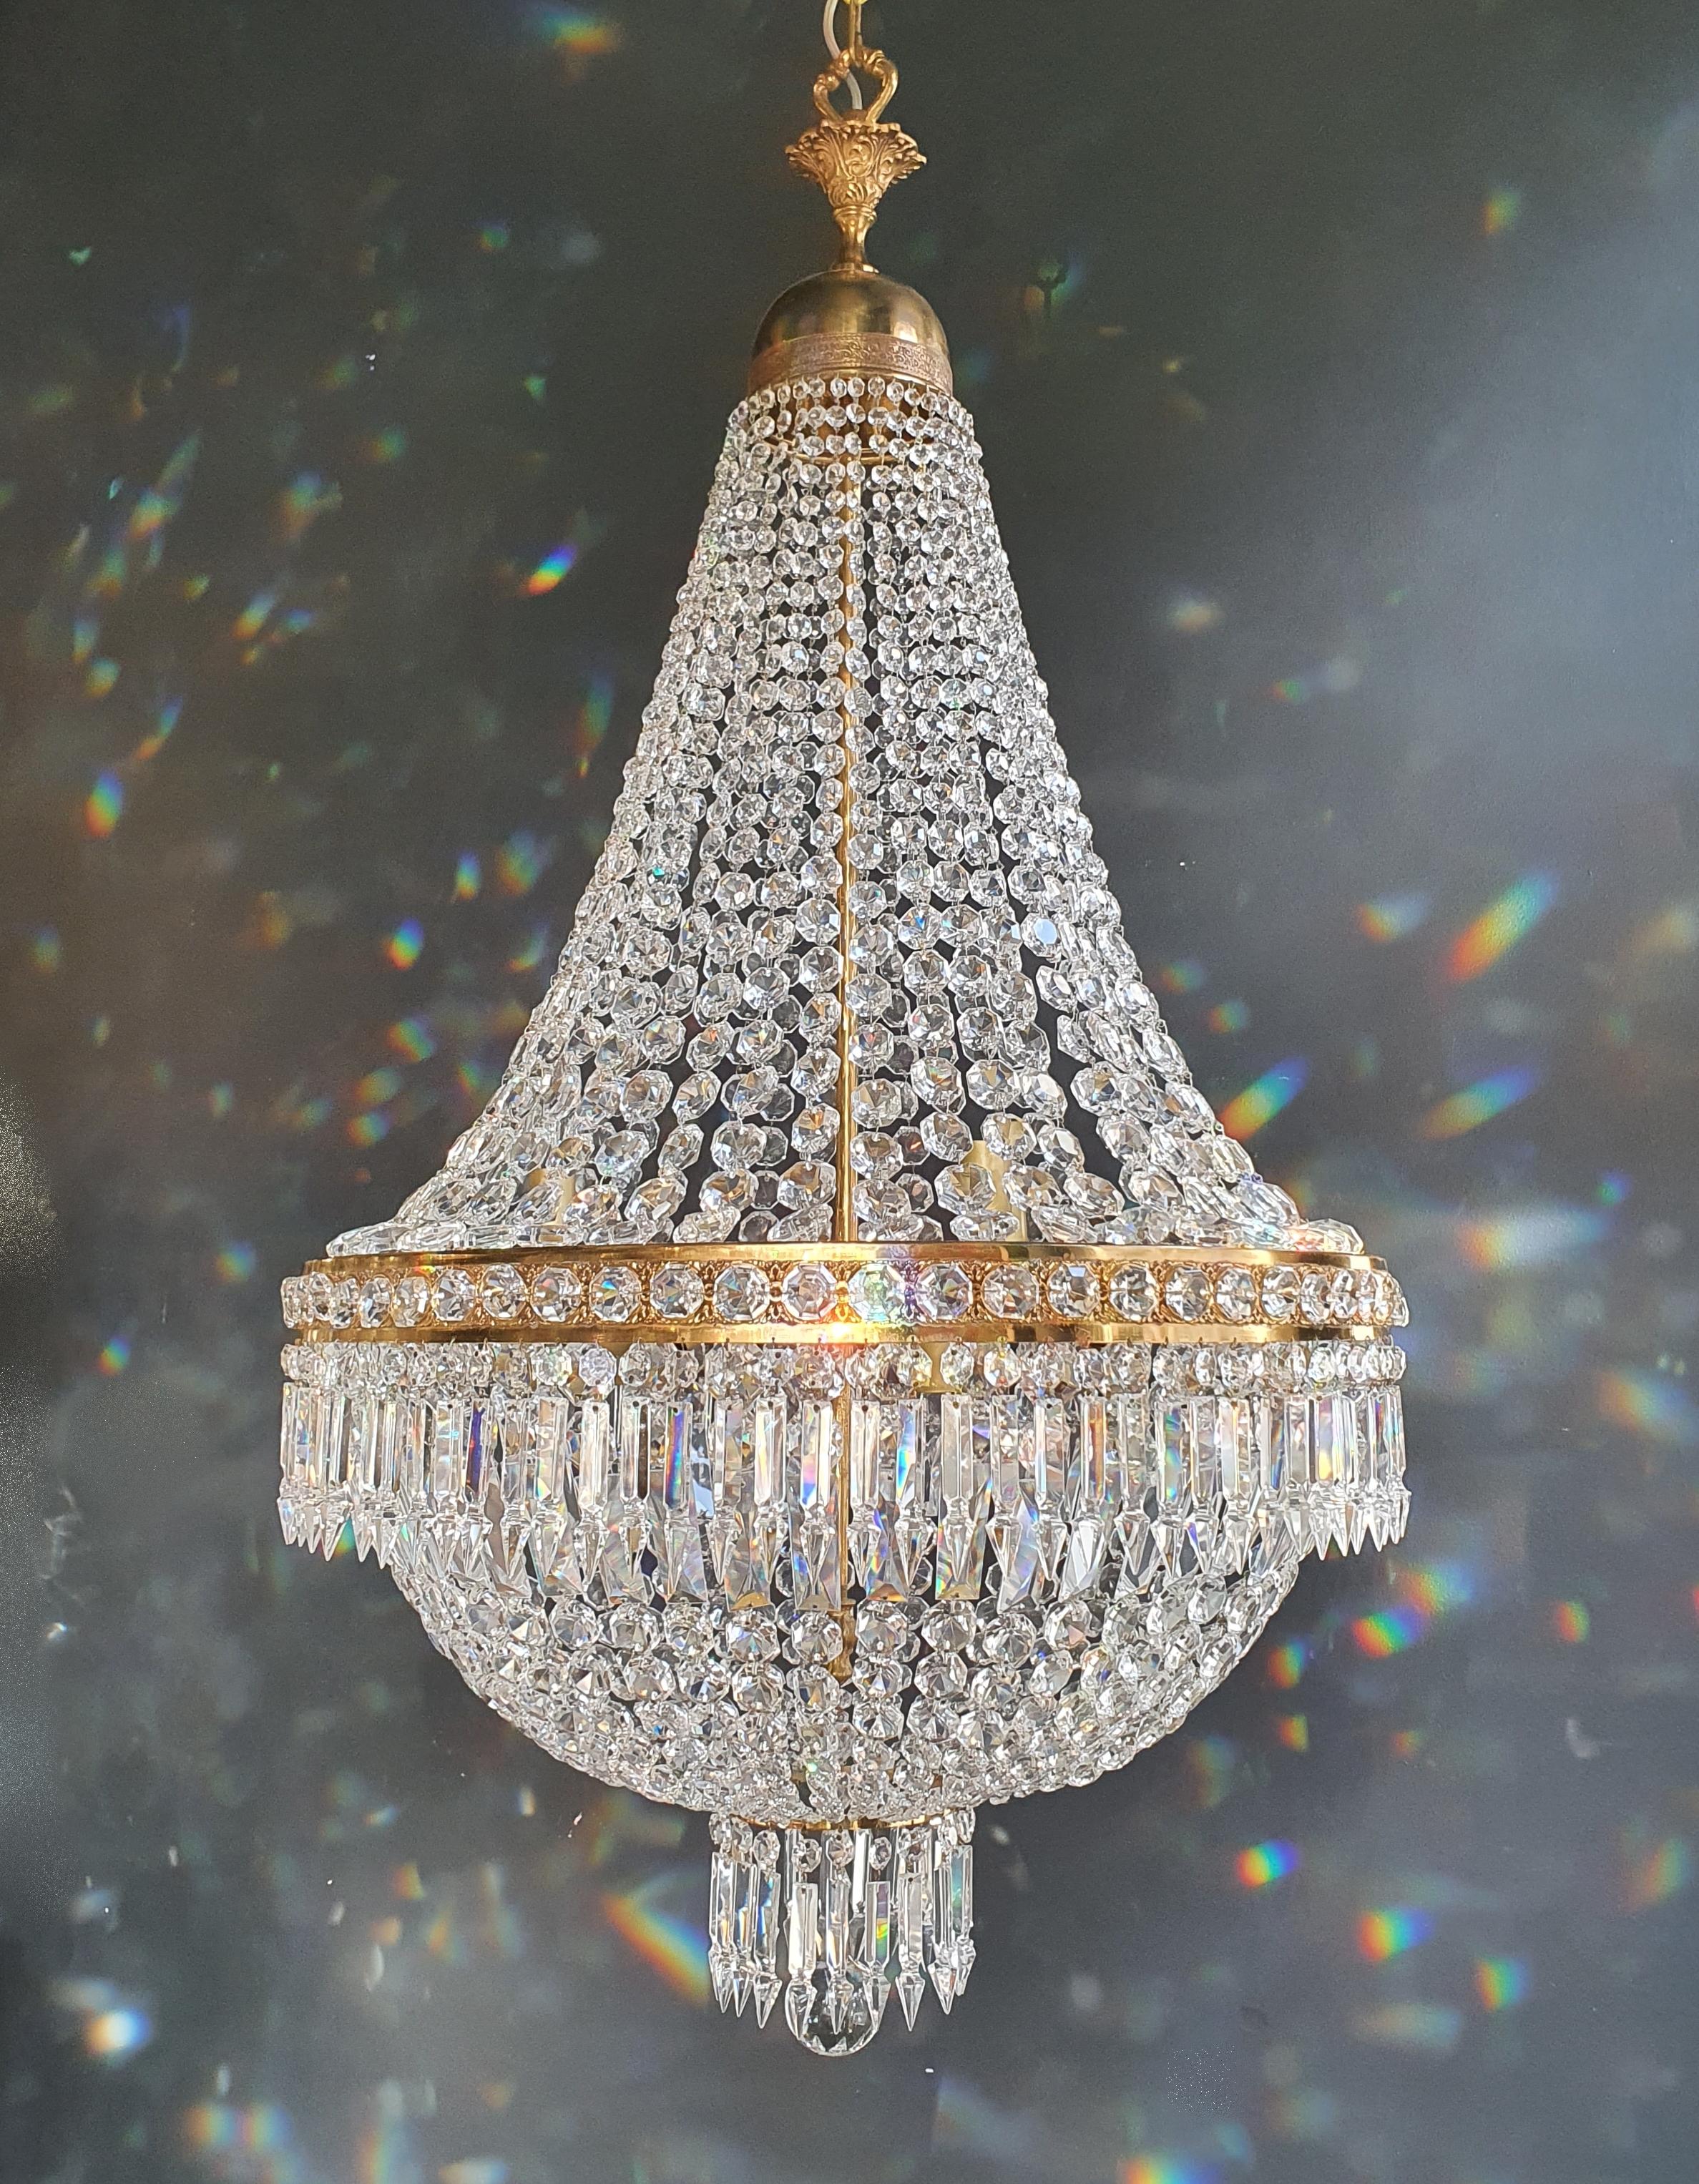 Montgolfiè Empire Brass Sac a Pearl Chandelier Crystal Lustre Ceiling Antique 4